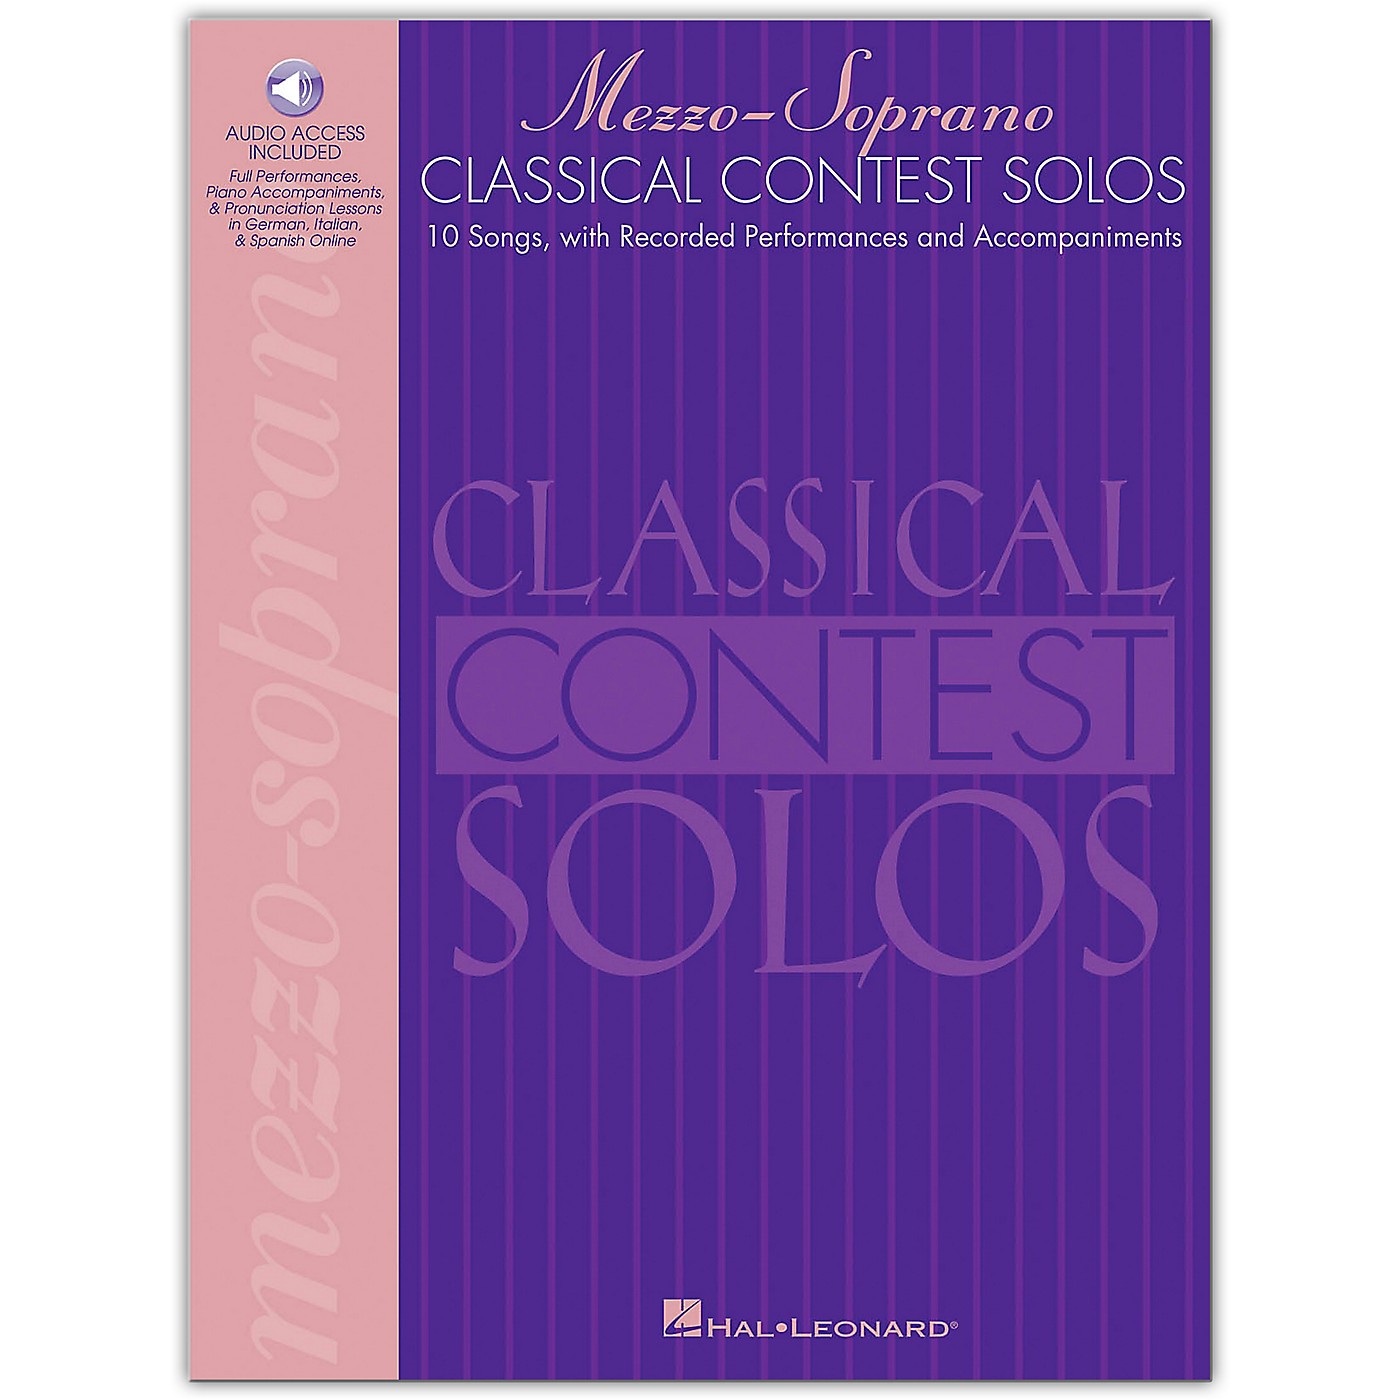 Hal Leonard Classical Contest Solos for Mezzo Soprano (Book/Online Audio) thumbnail